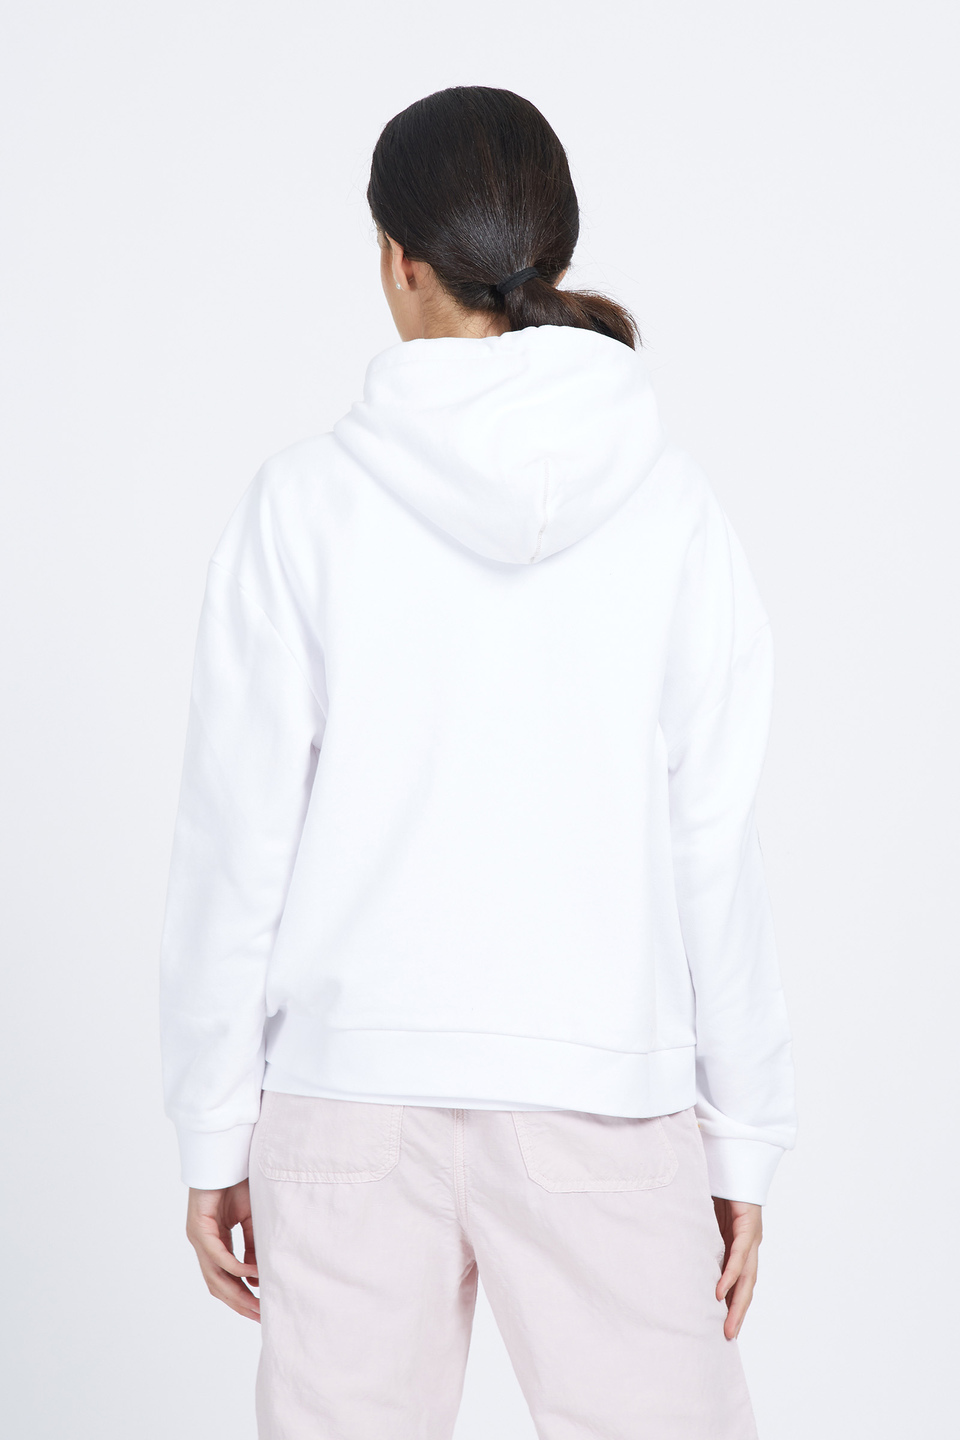 Damen-SweaT-shirt aus Baumwollmischung mit normaler Passform- Verge | La Martina - Official Online Shop